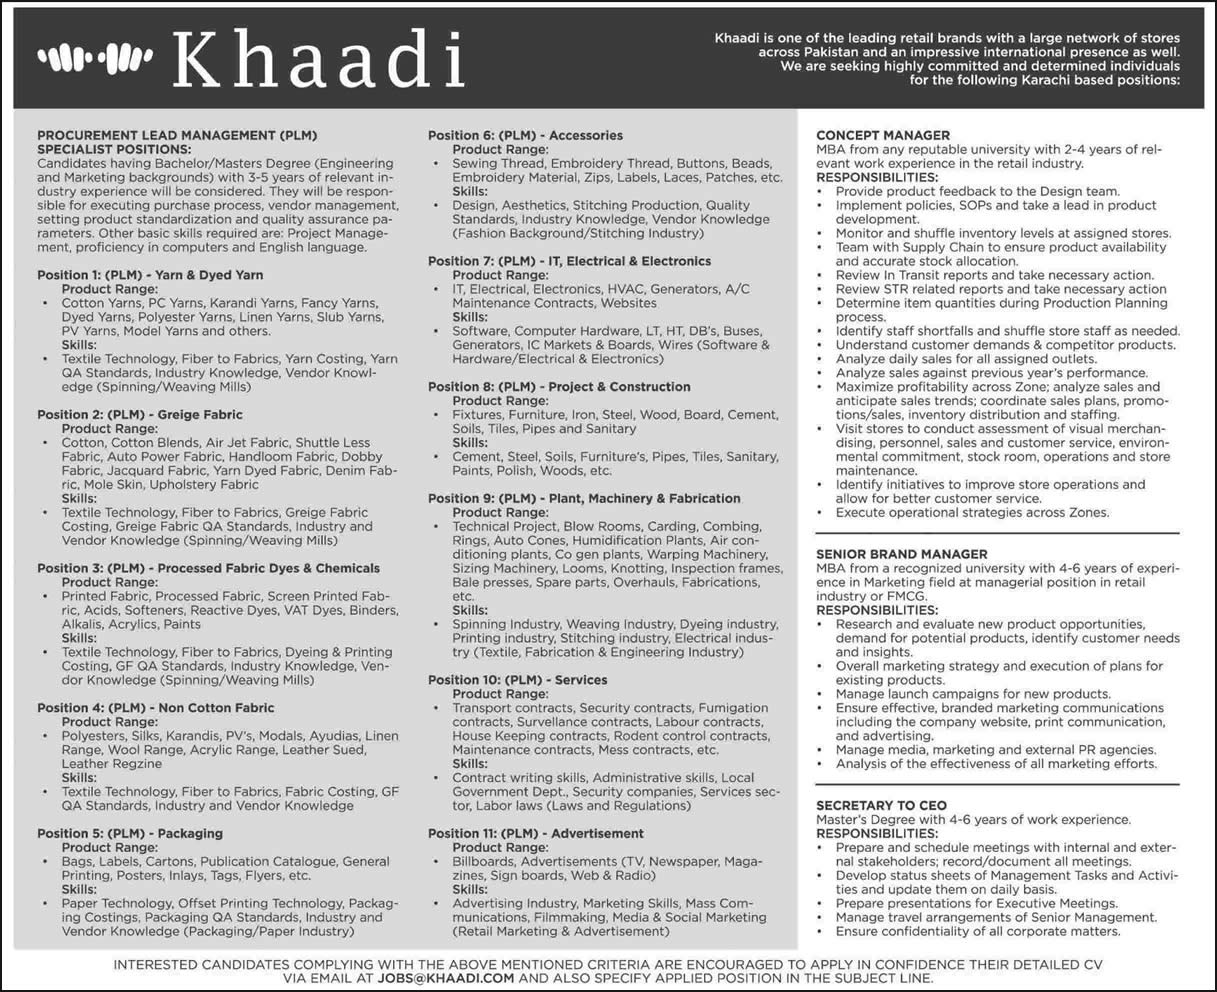 Khaadi Jobs 2015 March Karachi Procurement Lead Management, Concept / Brand Manager & Secretary